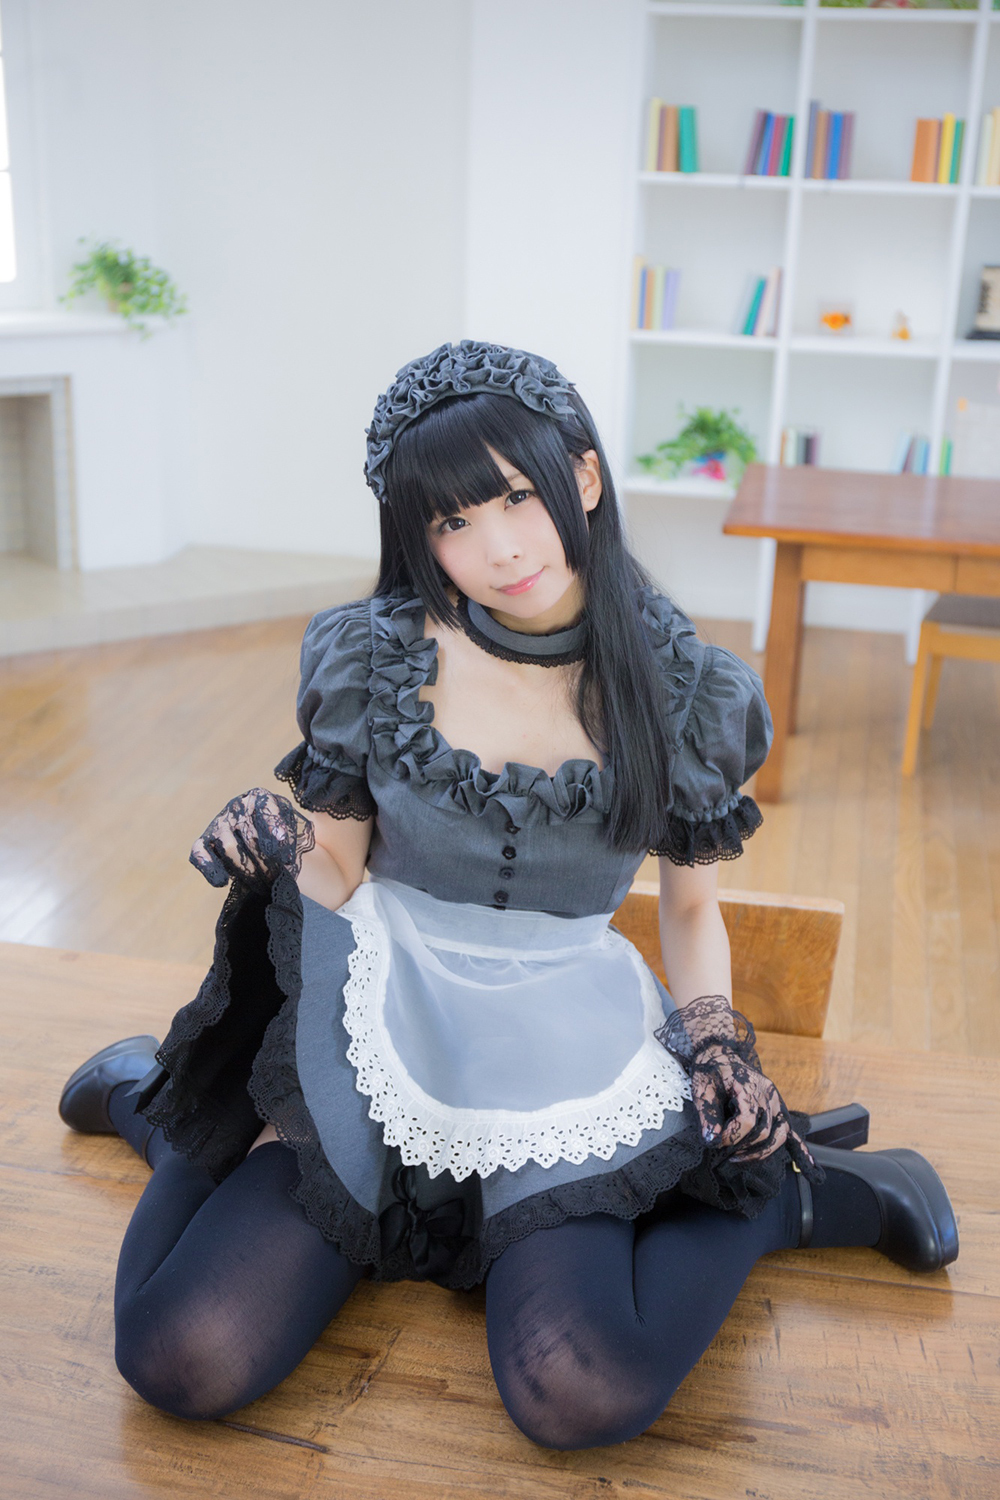 The black silk maid